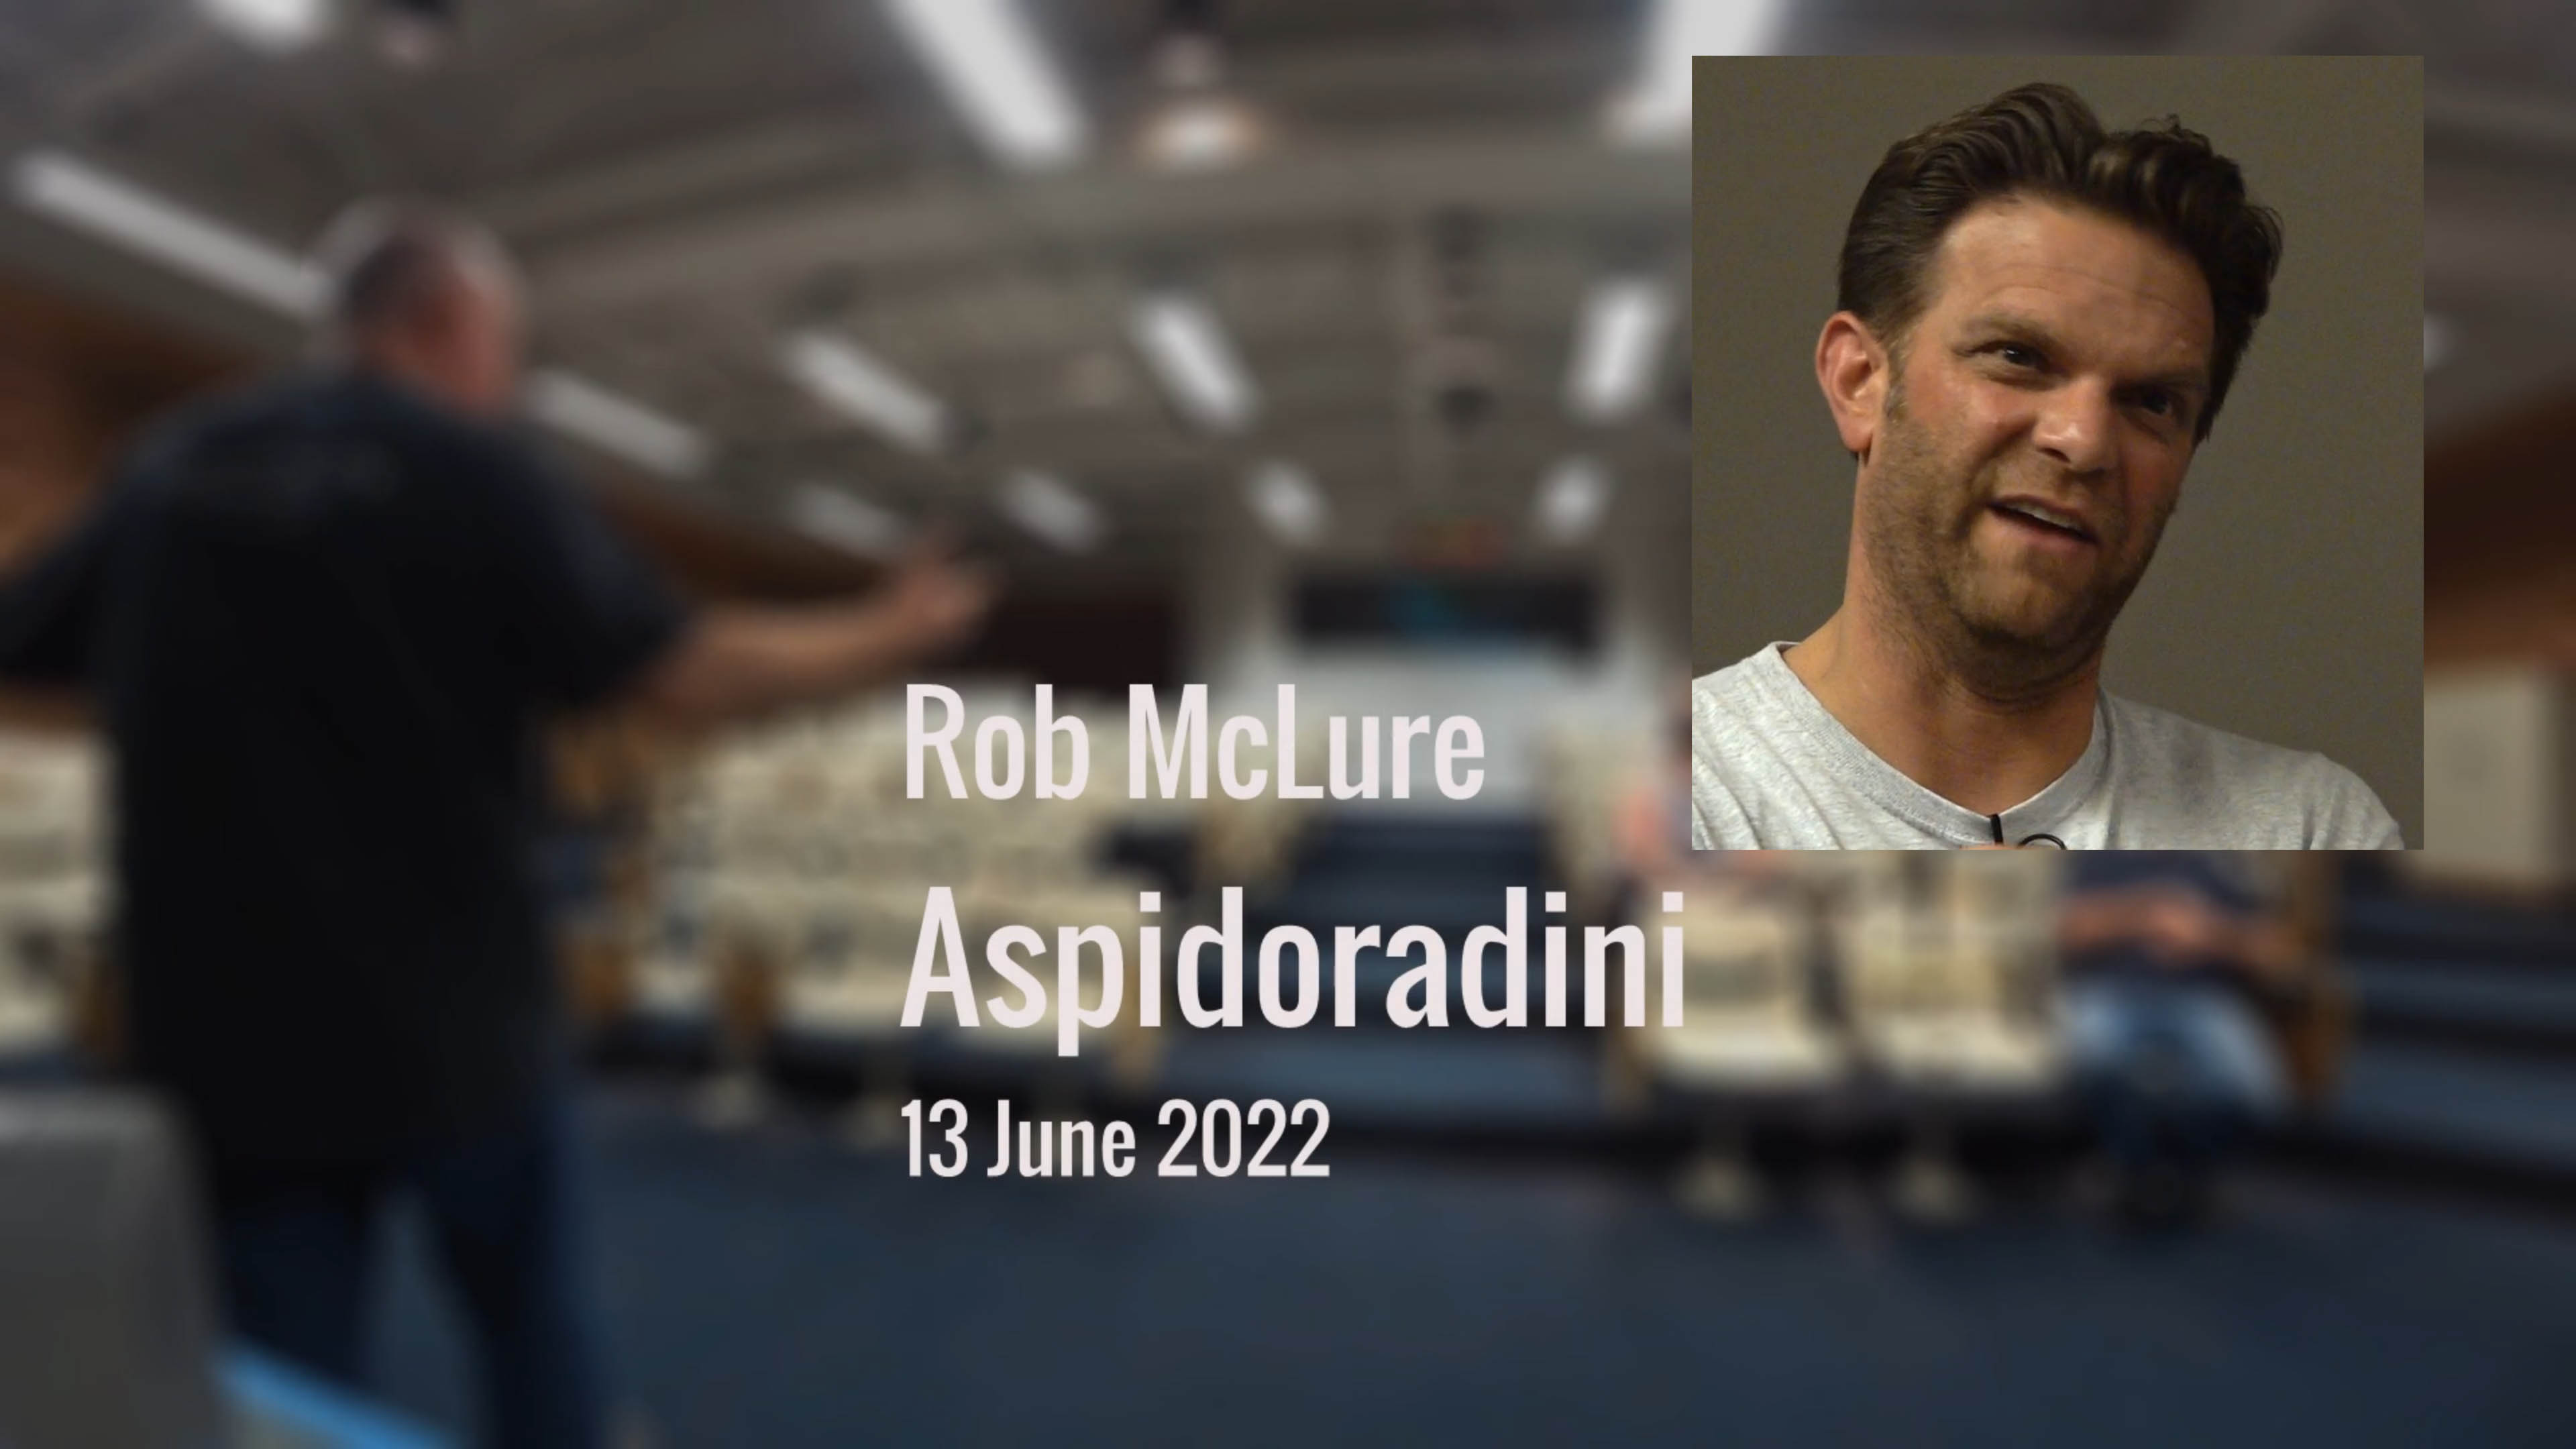 Aspidoradini - Rob McLure - Monday, June 13, 2022